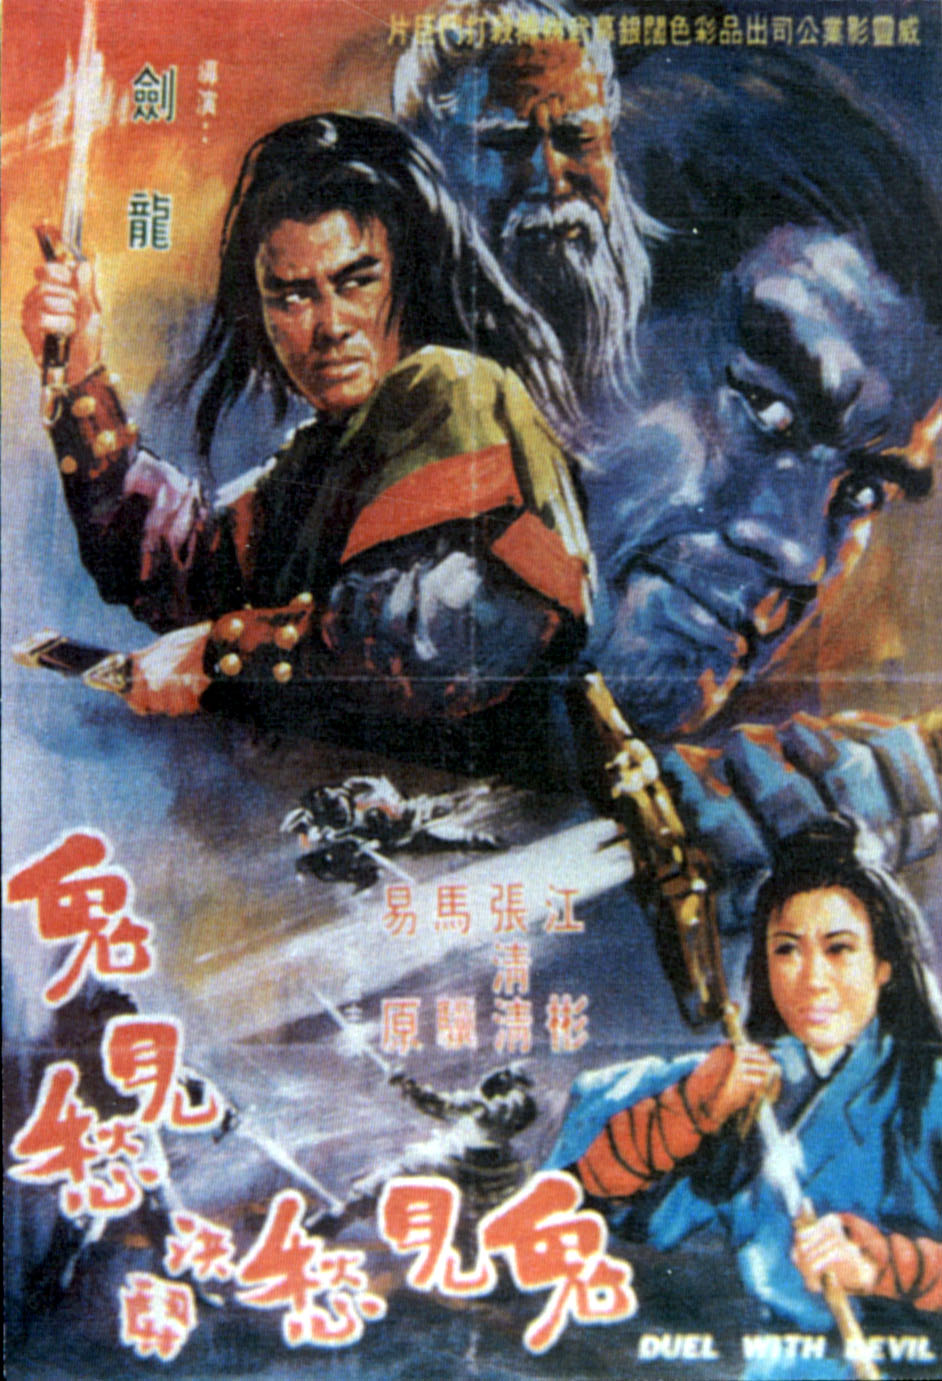 Mang nu jue dou gui jian chou (1970) with English Subtitles on DVD on DVD